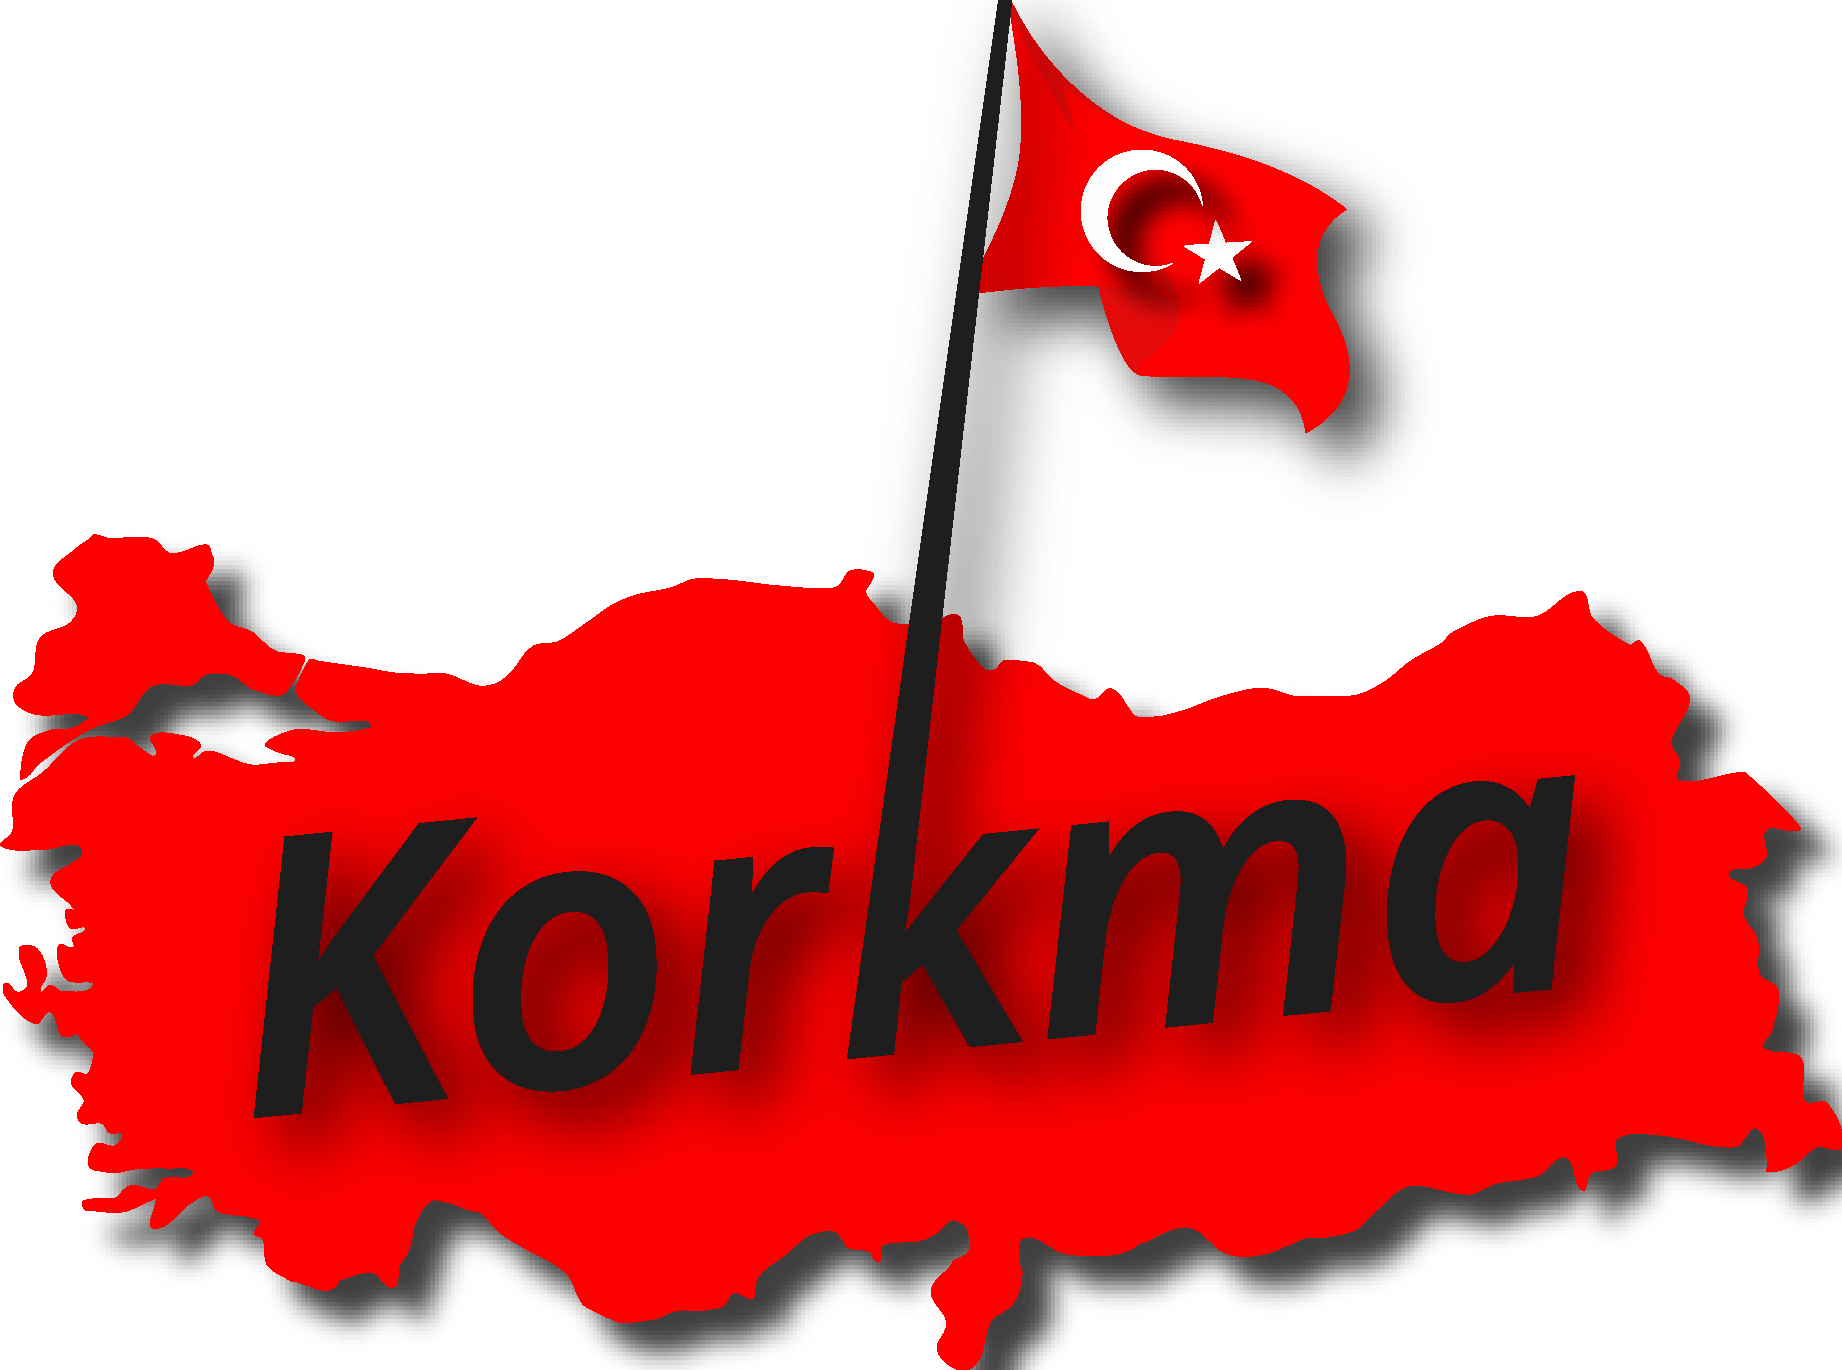 Turk Bayrağı Korkma Logo Vector